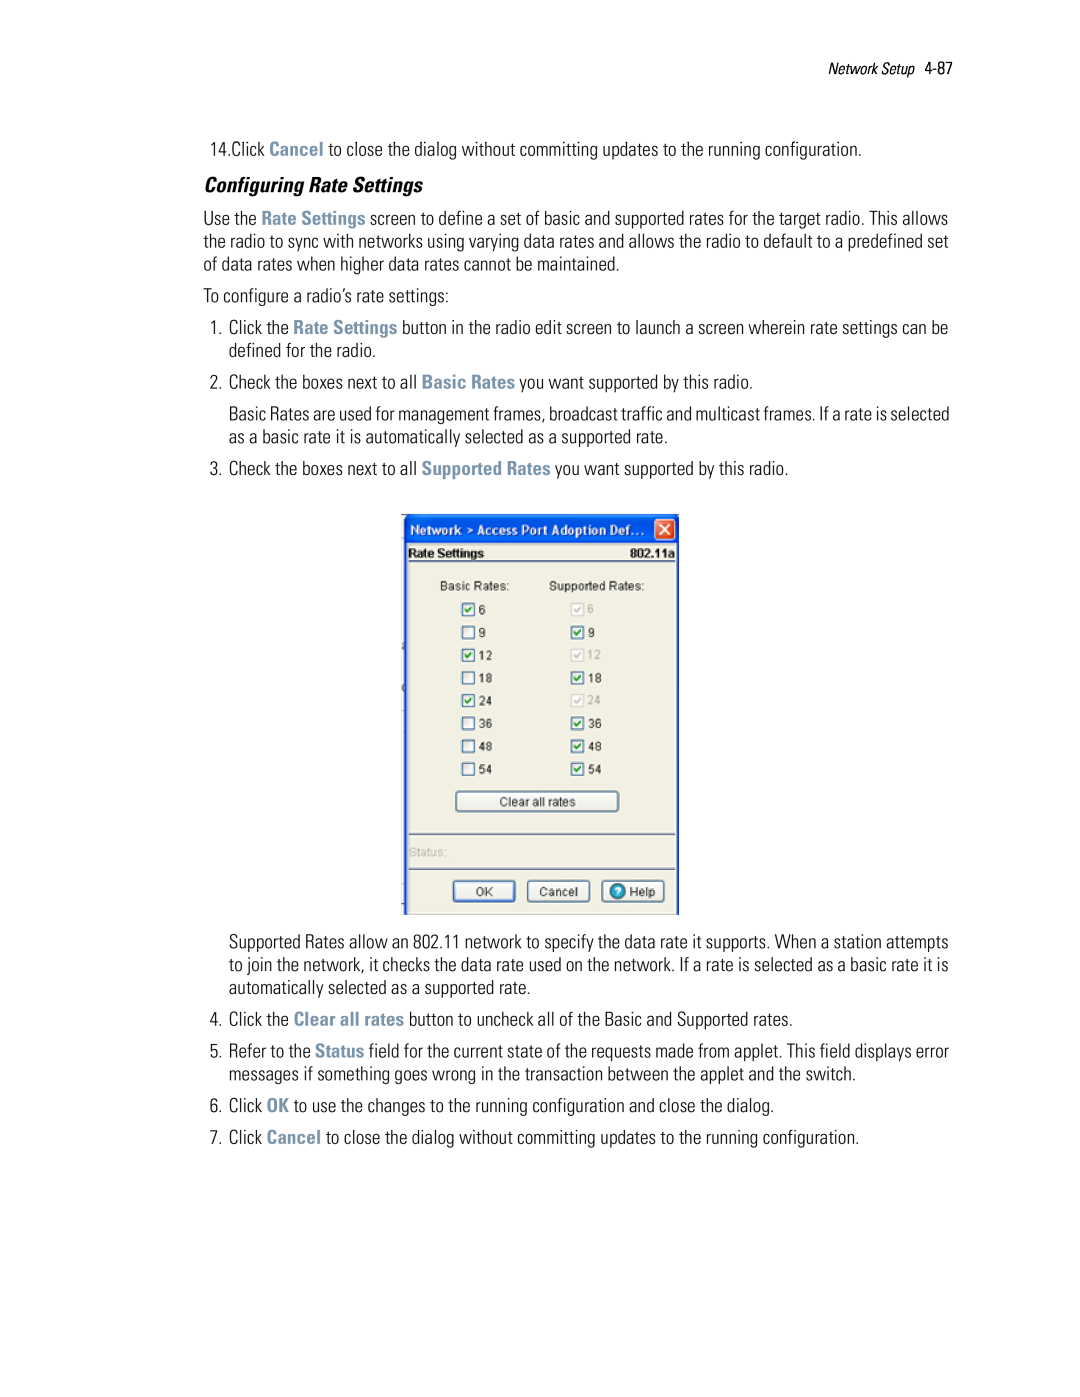 Motorola WS5100 manual Configuring Rate Settings, To configure a radio’s rate settings 